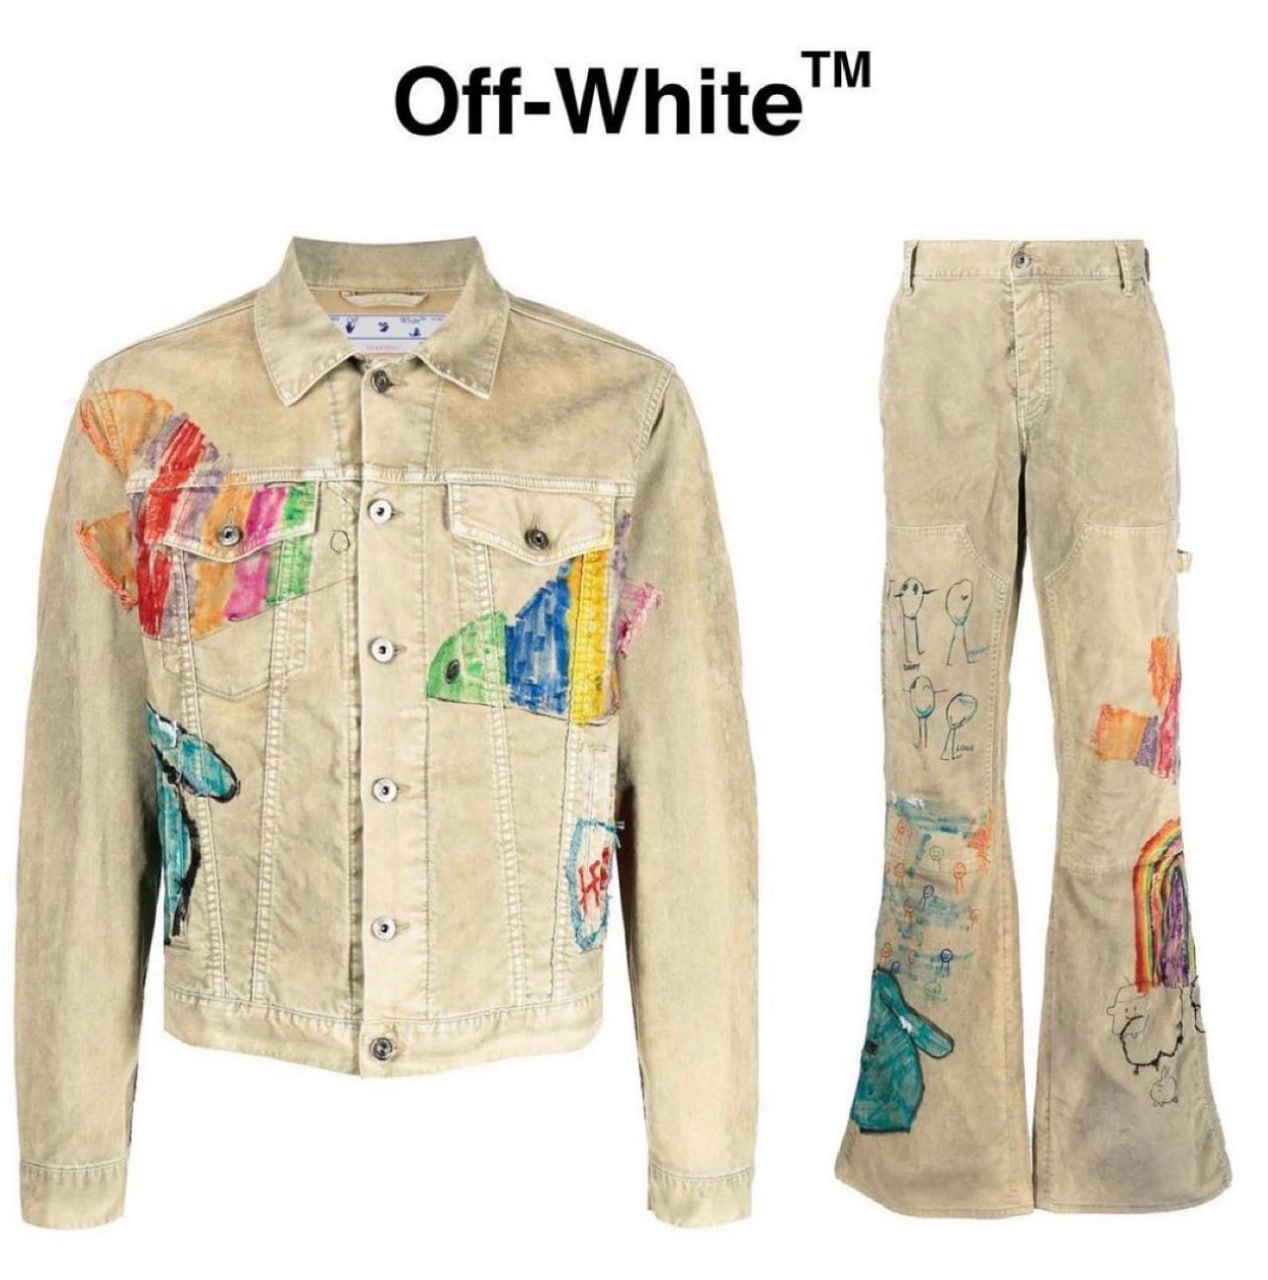 Сын Вирджила Абло украсил джинсовый костюм Off-White яркими рисунками (фото 1)